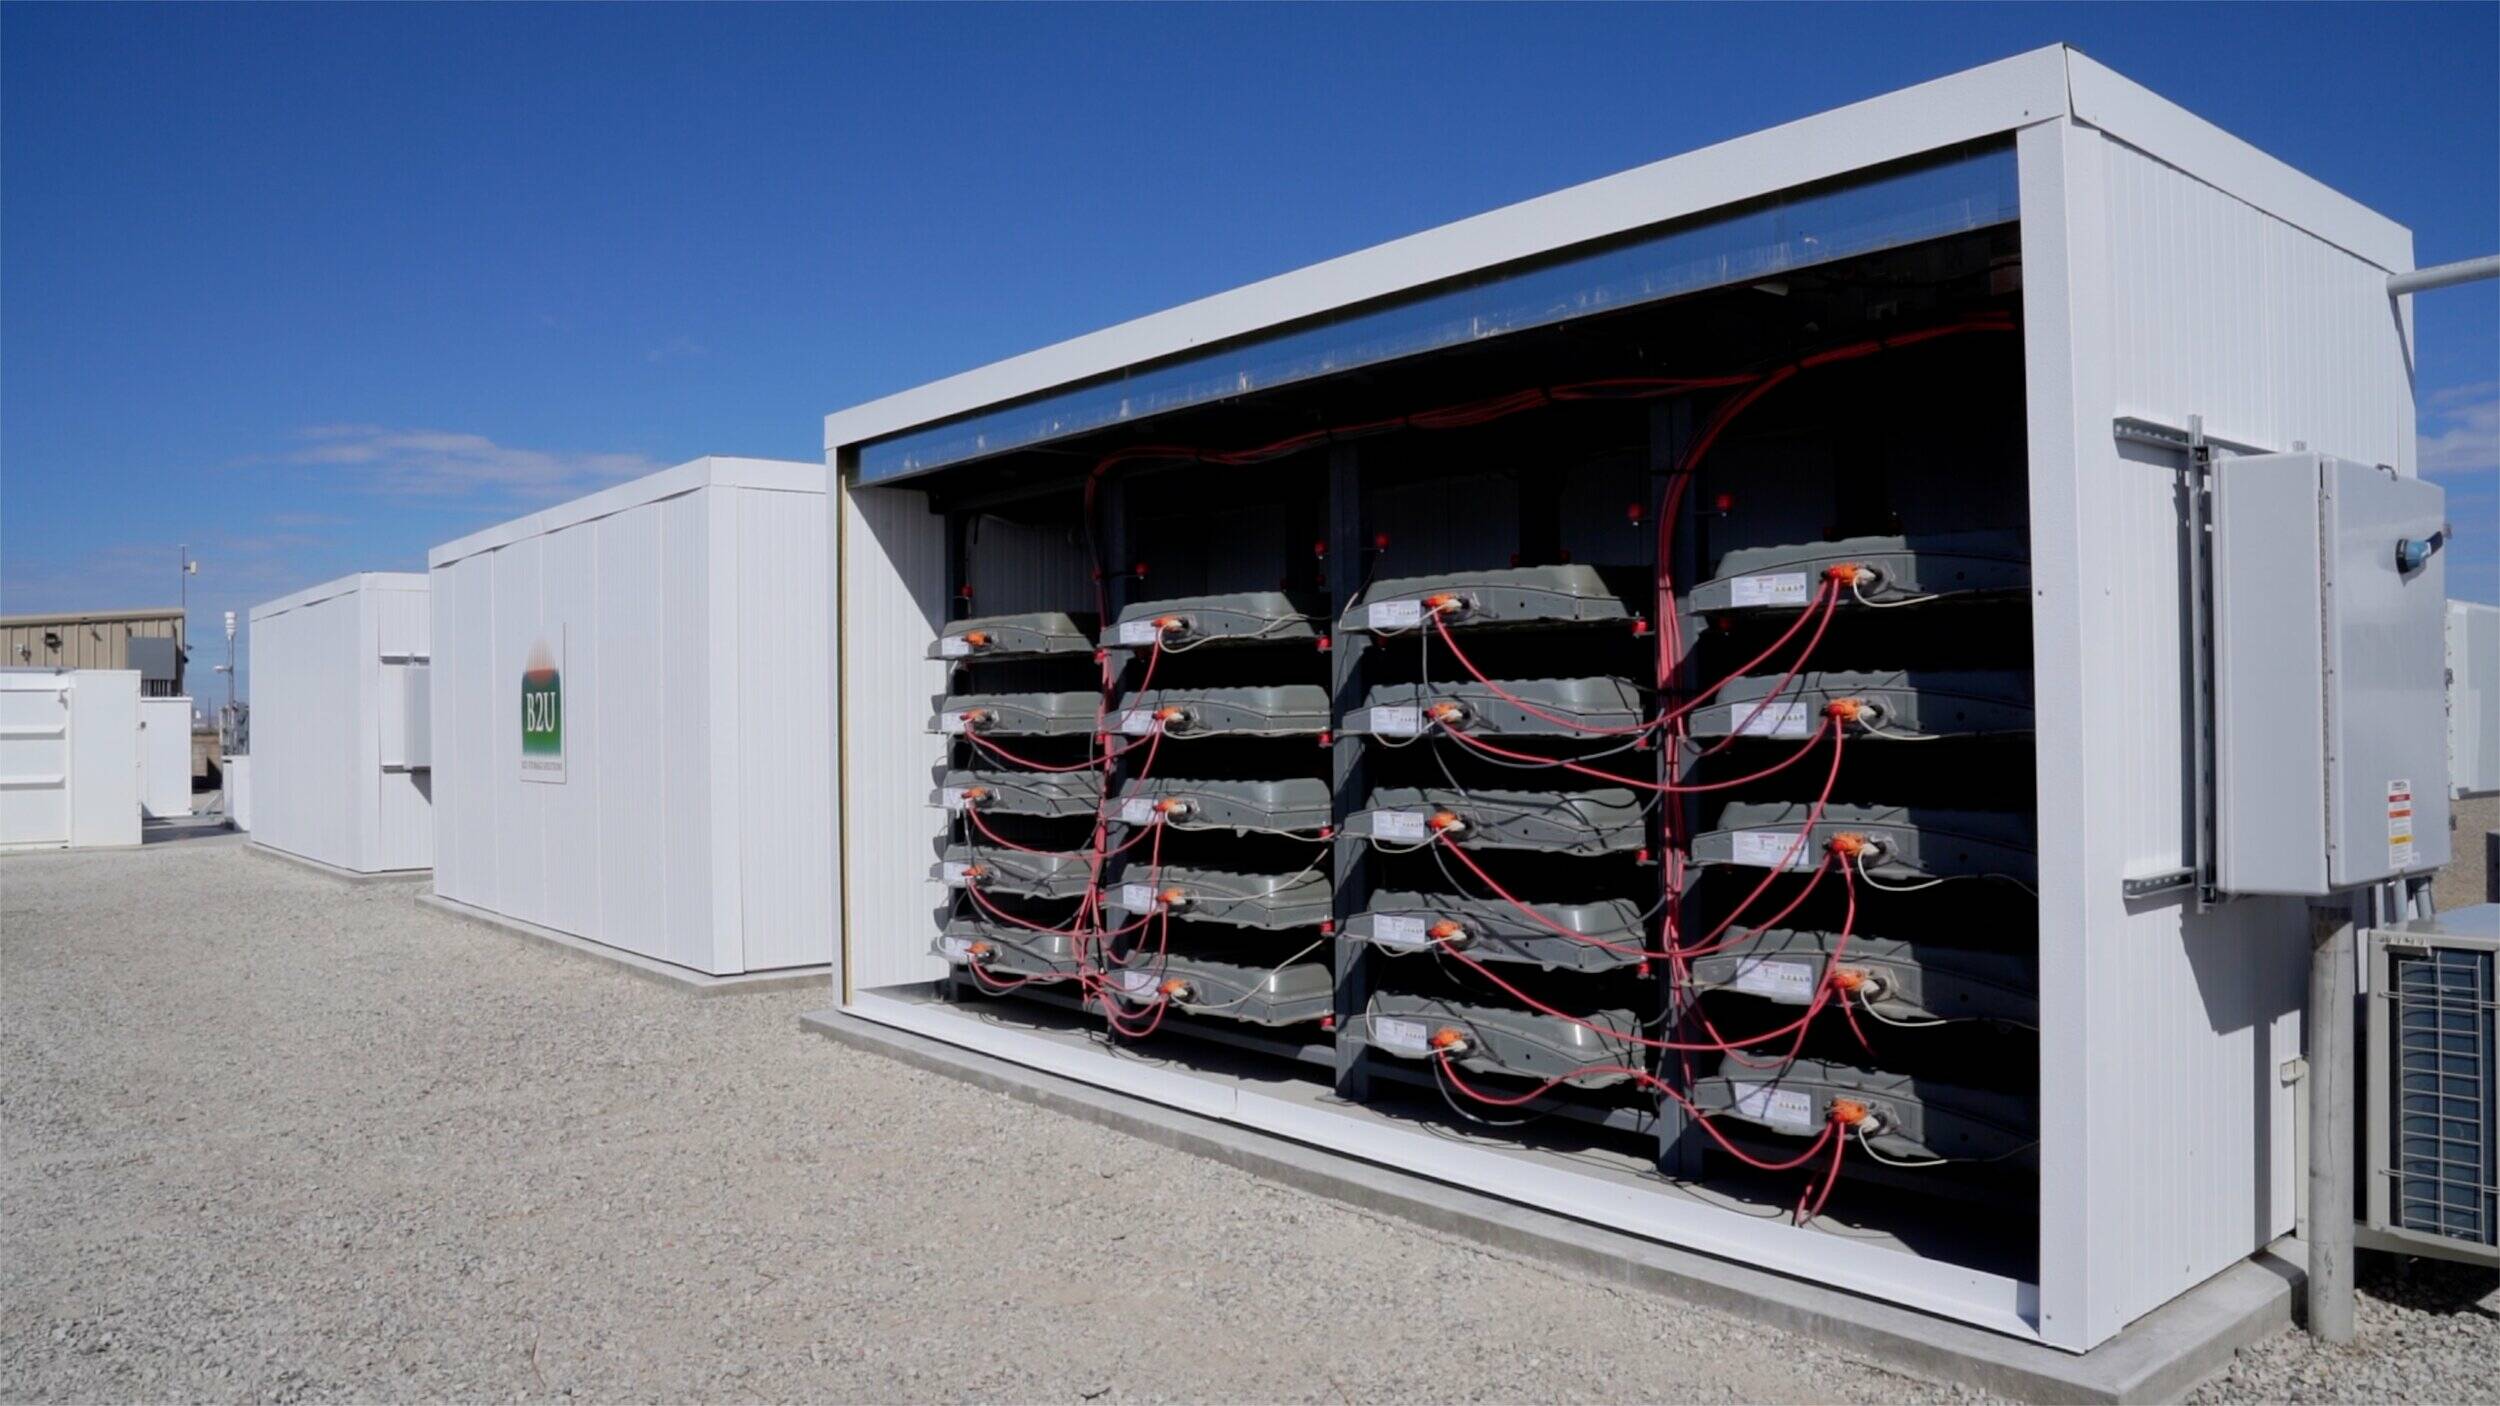 Used EV Car Batteries Find New Life Storing Solar Power In California TrendRadars